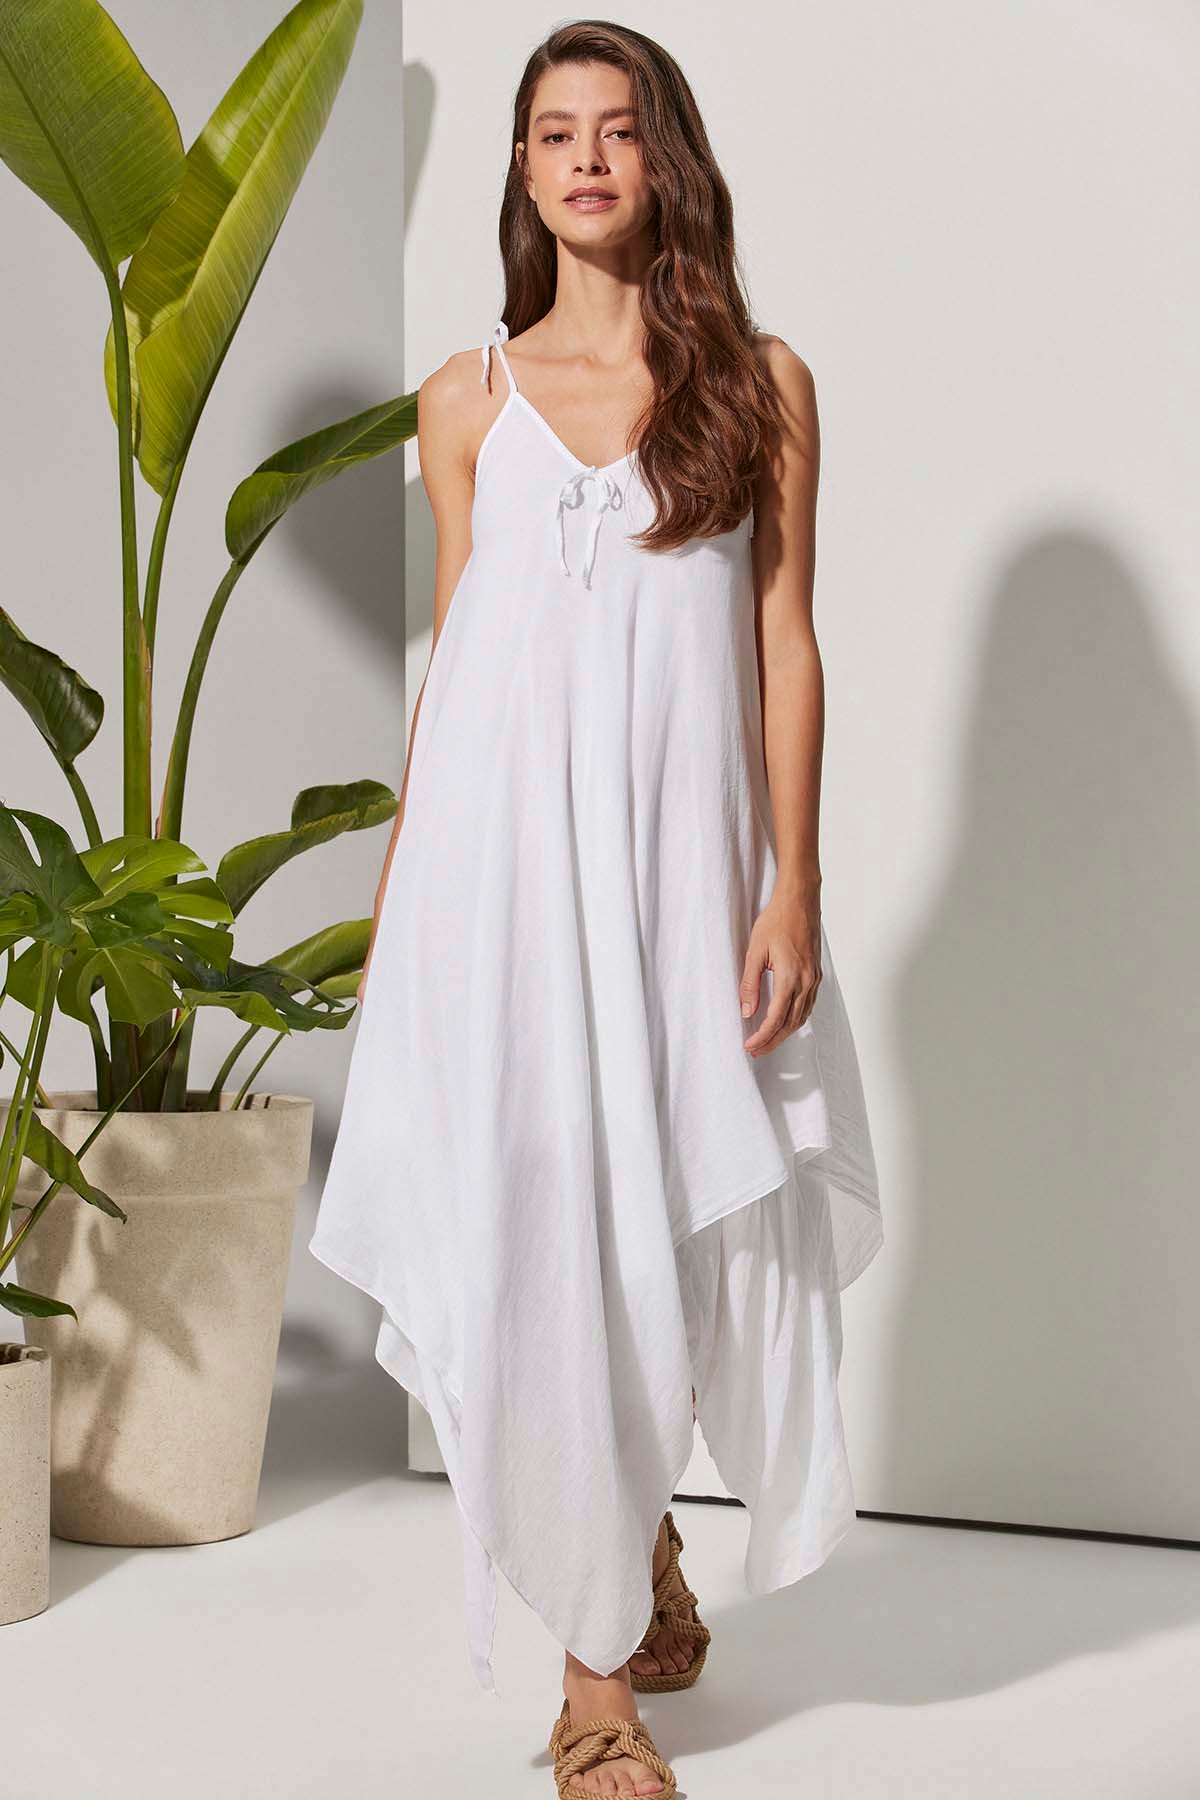 White by Nature - Afrodit Şile Bezi Beyaz Kadın Elbise